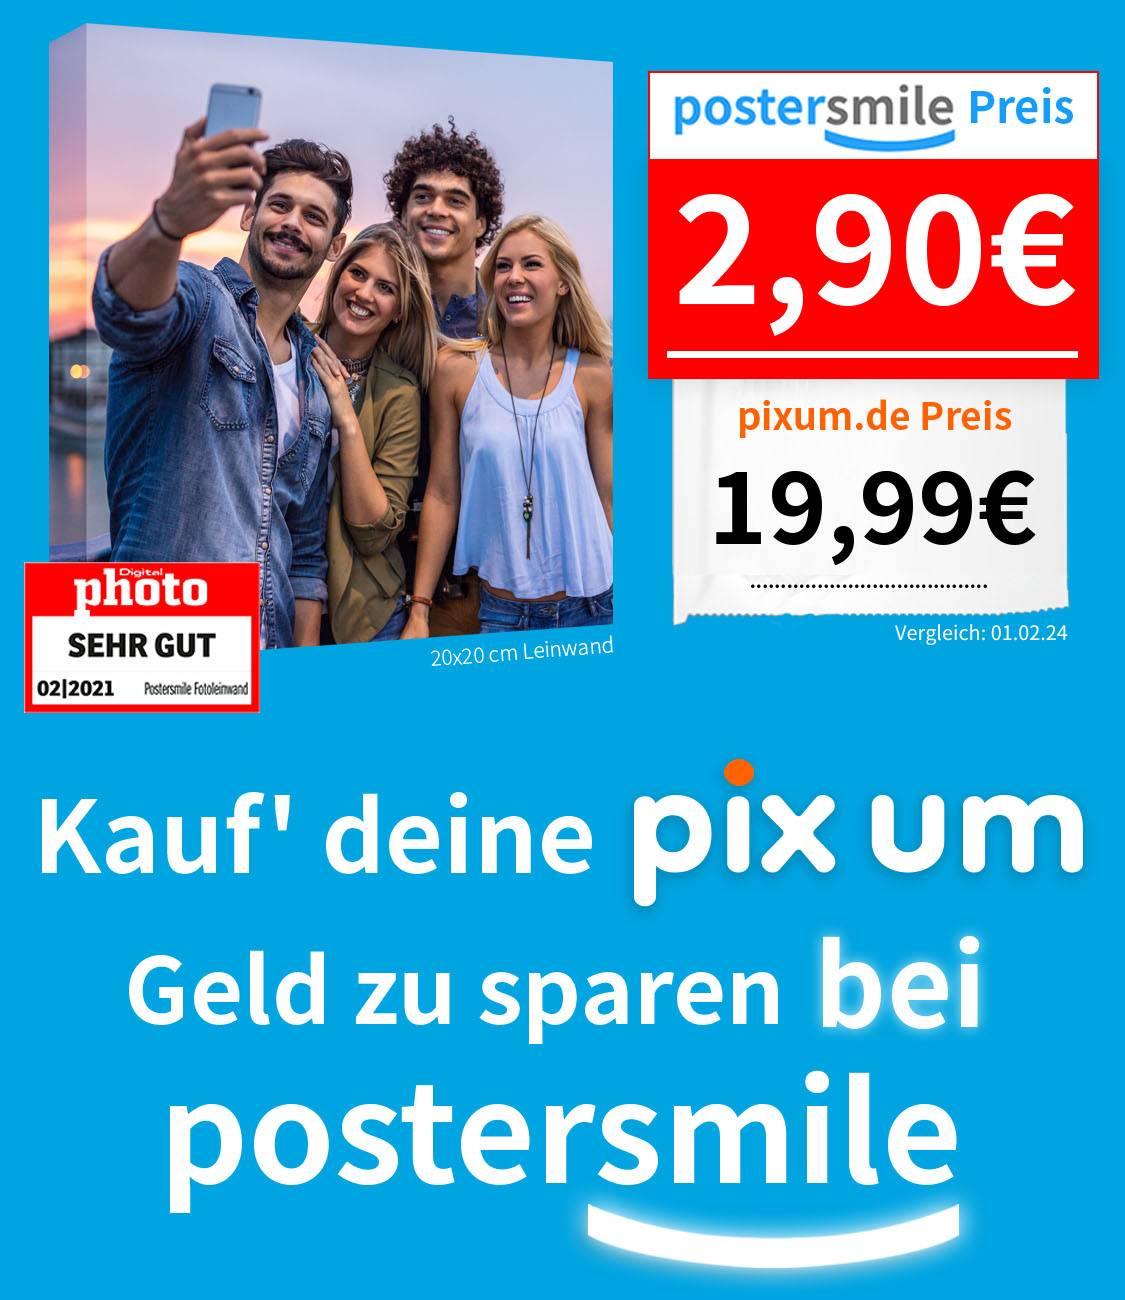 Fotoleinwand günstig - Foto auf Leinwand Preisvergleich postersmile.de vs. pixum.de